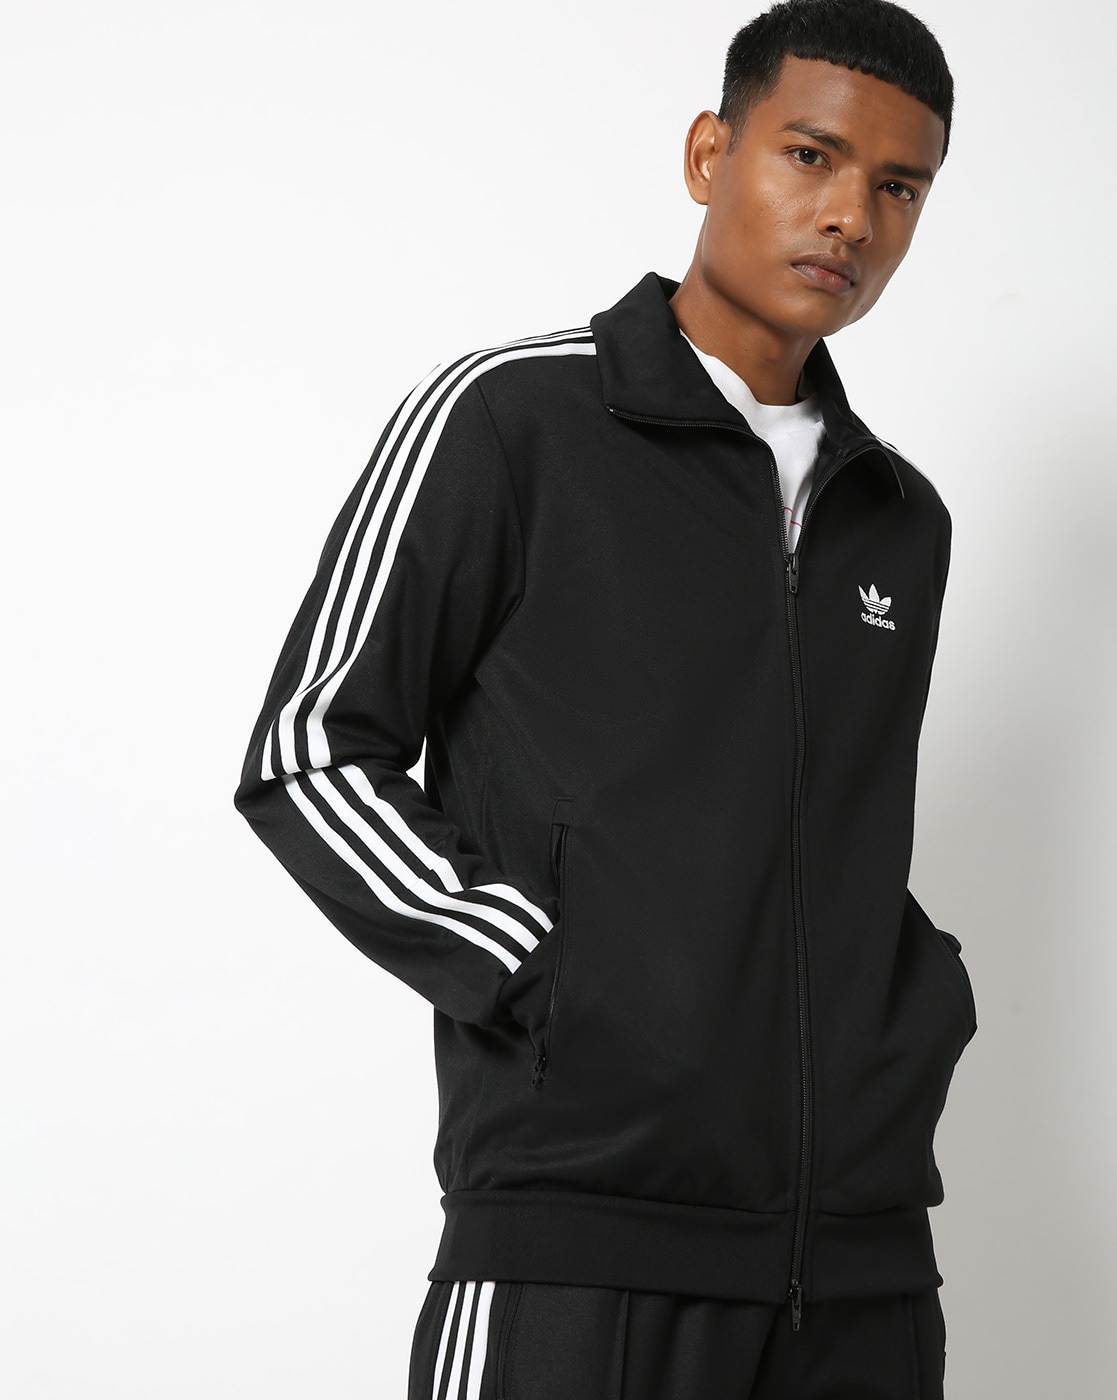 Buy Jackets & for Men by Adidas Online | Ajio.com